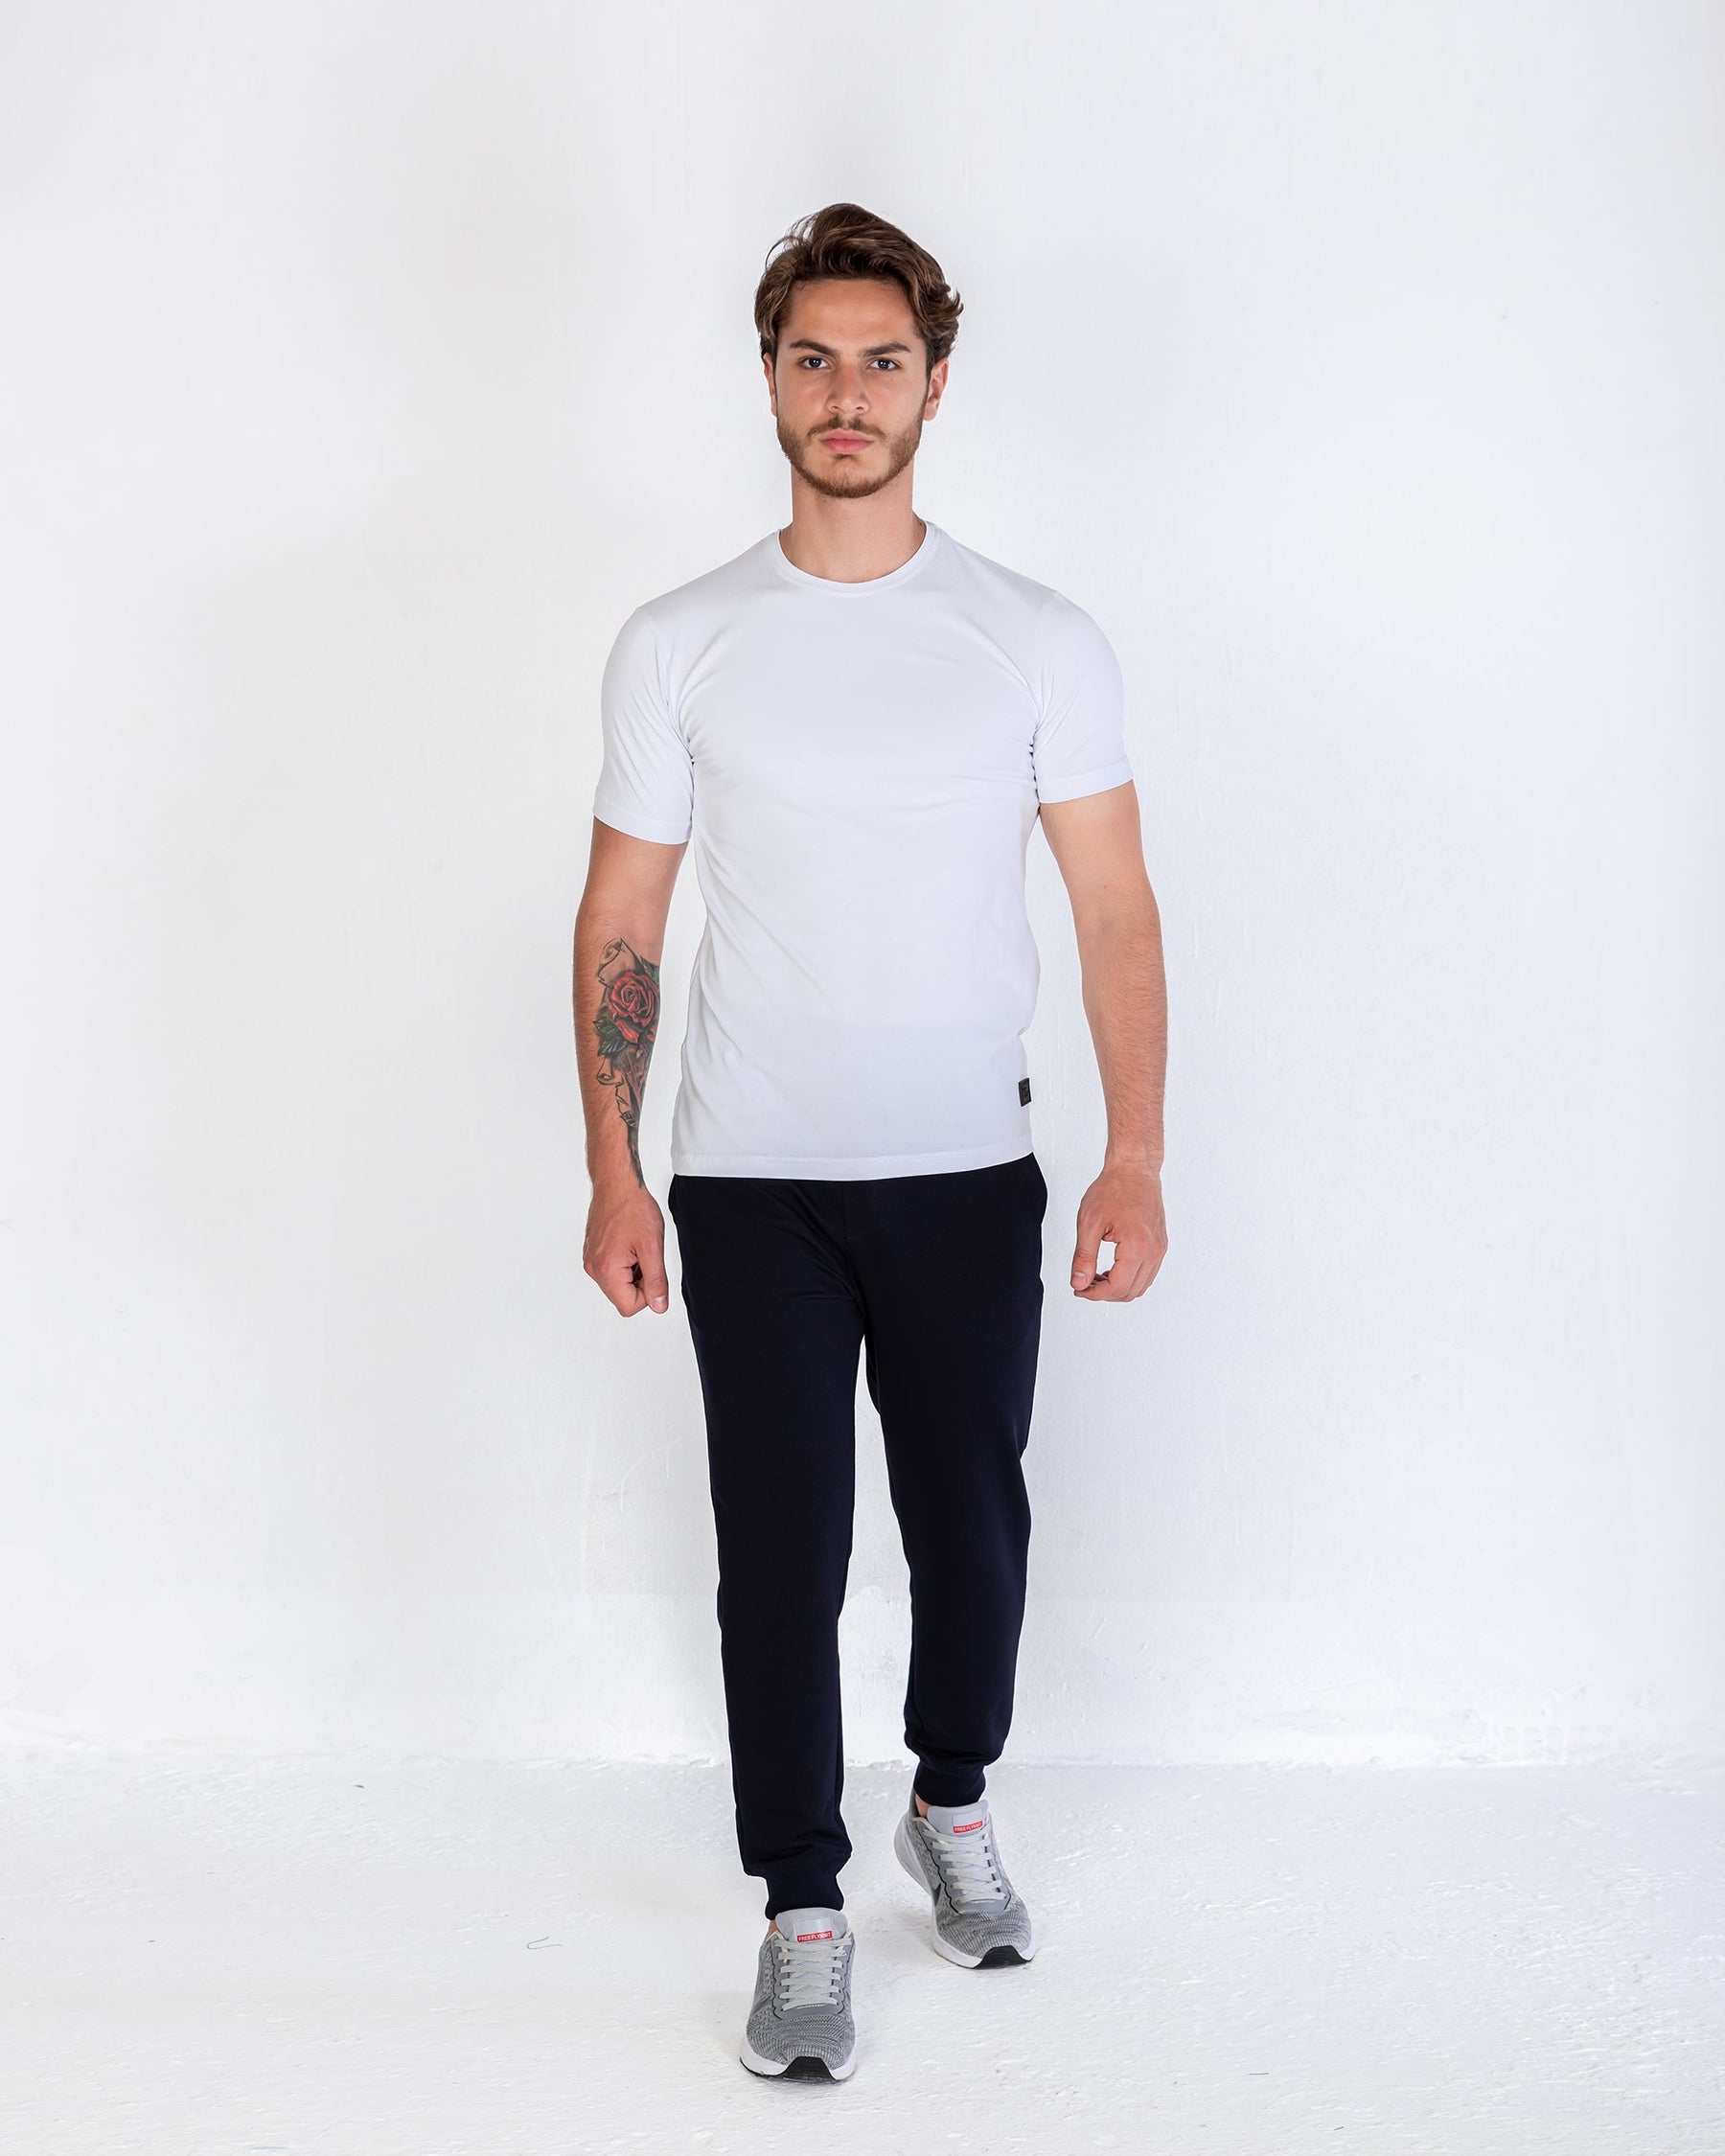 T-Shirt Cotton Lycra Round Neck Plain - White